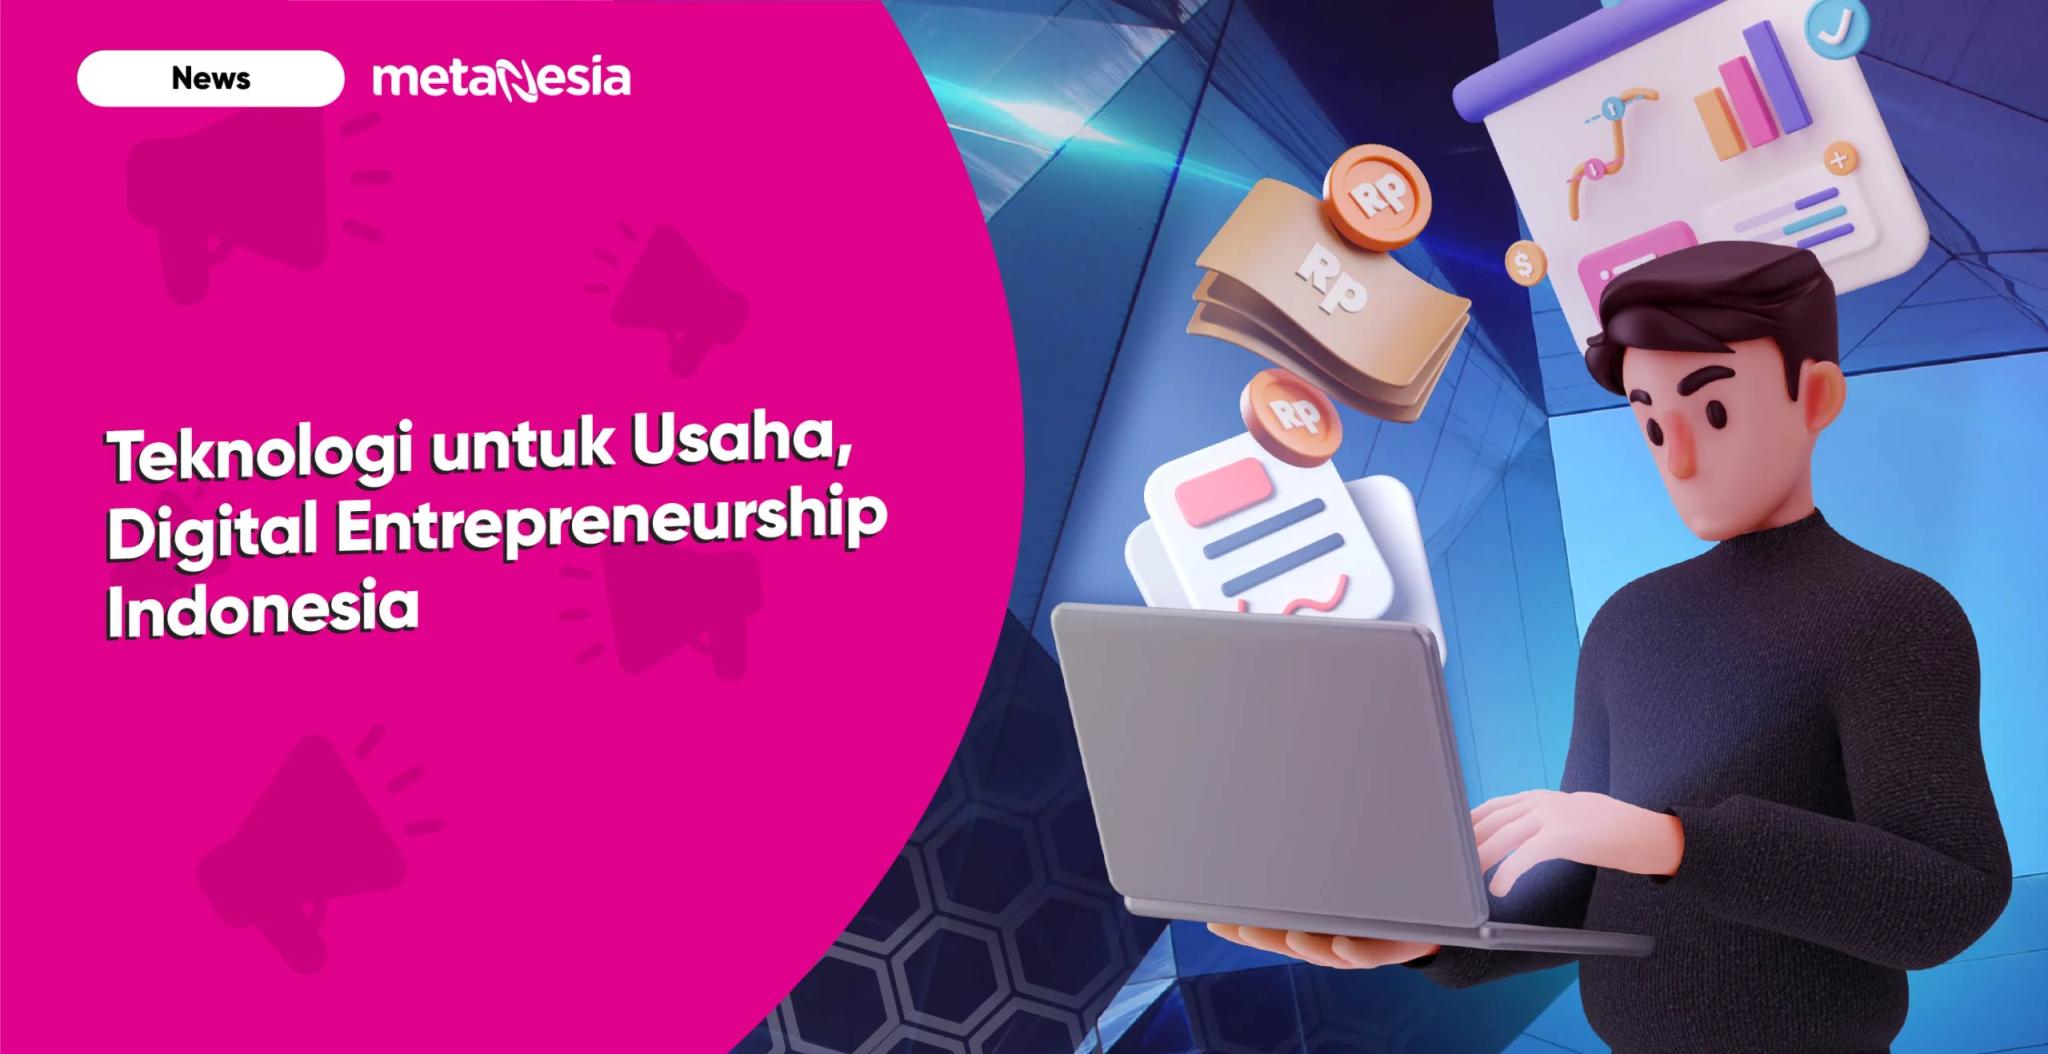 Digital Entrepreneurship Indonesia, Manfaatkan Teknologi Untuk Peluang Usaha